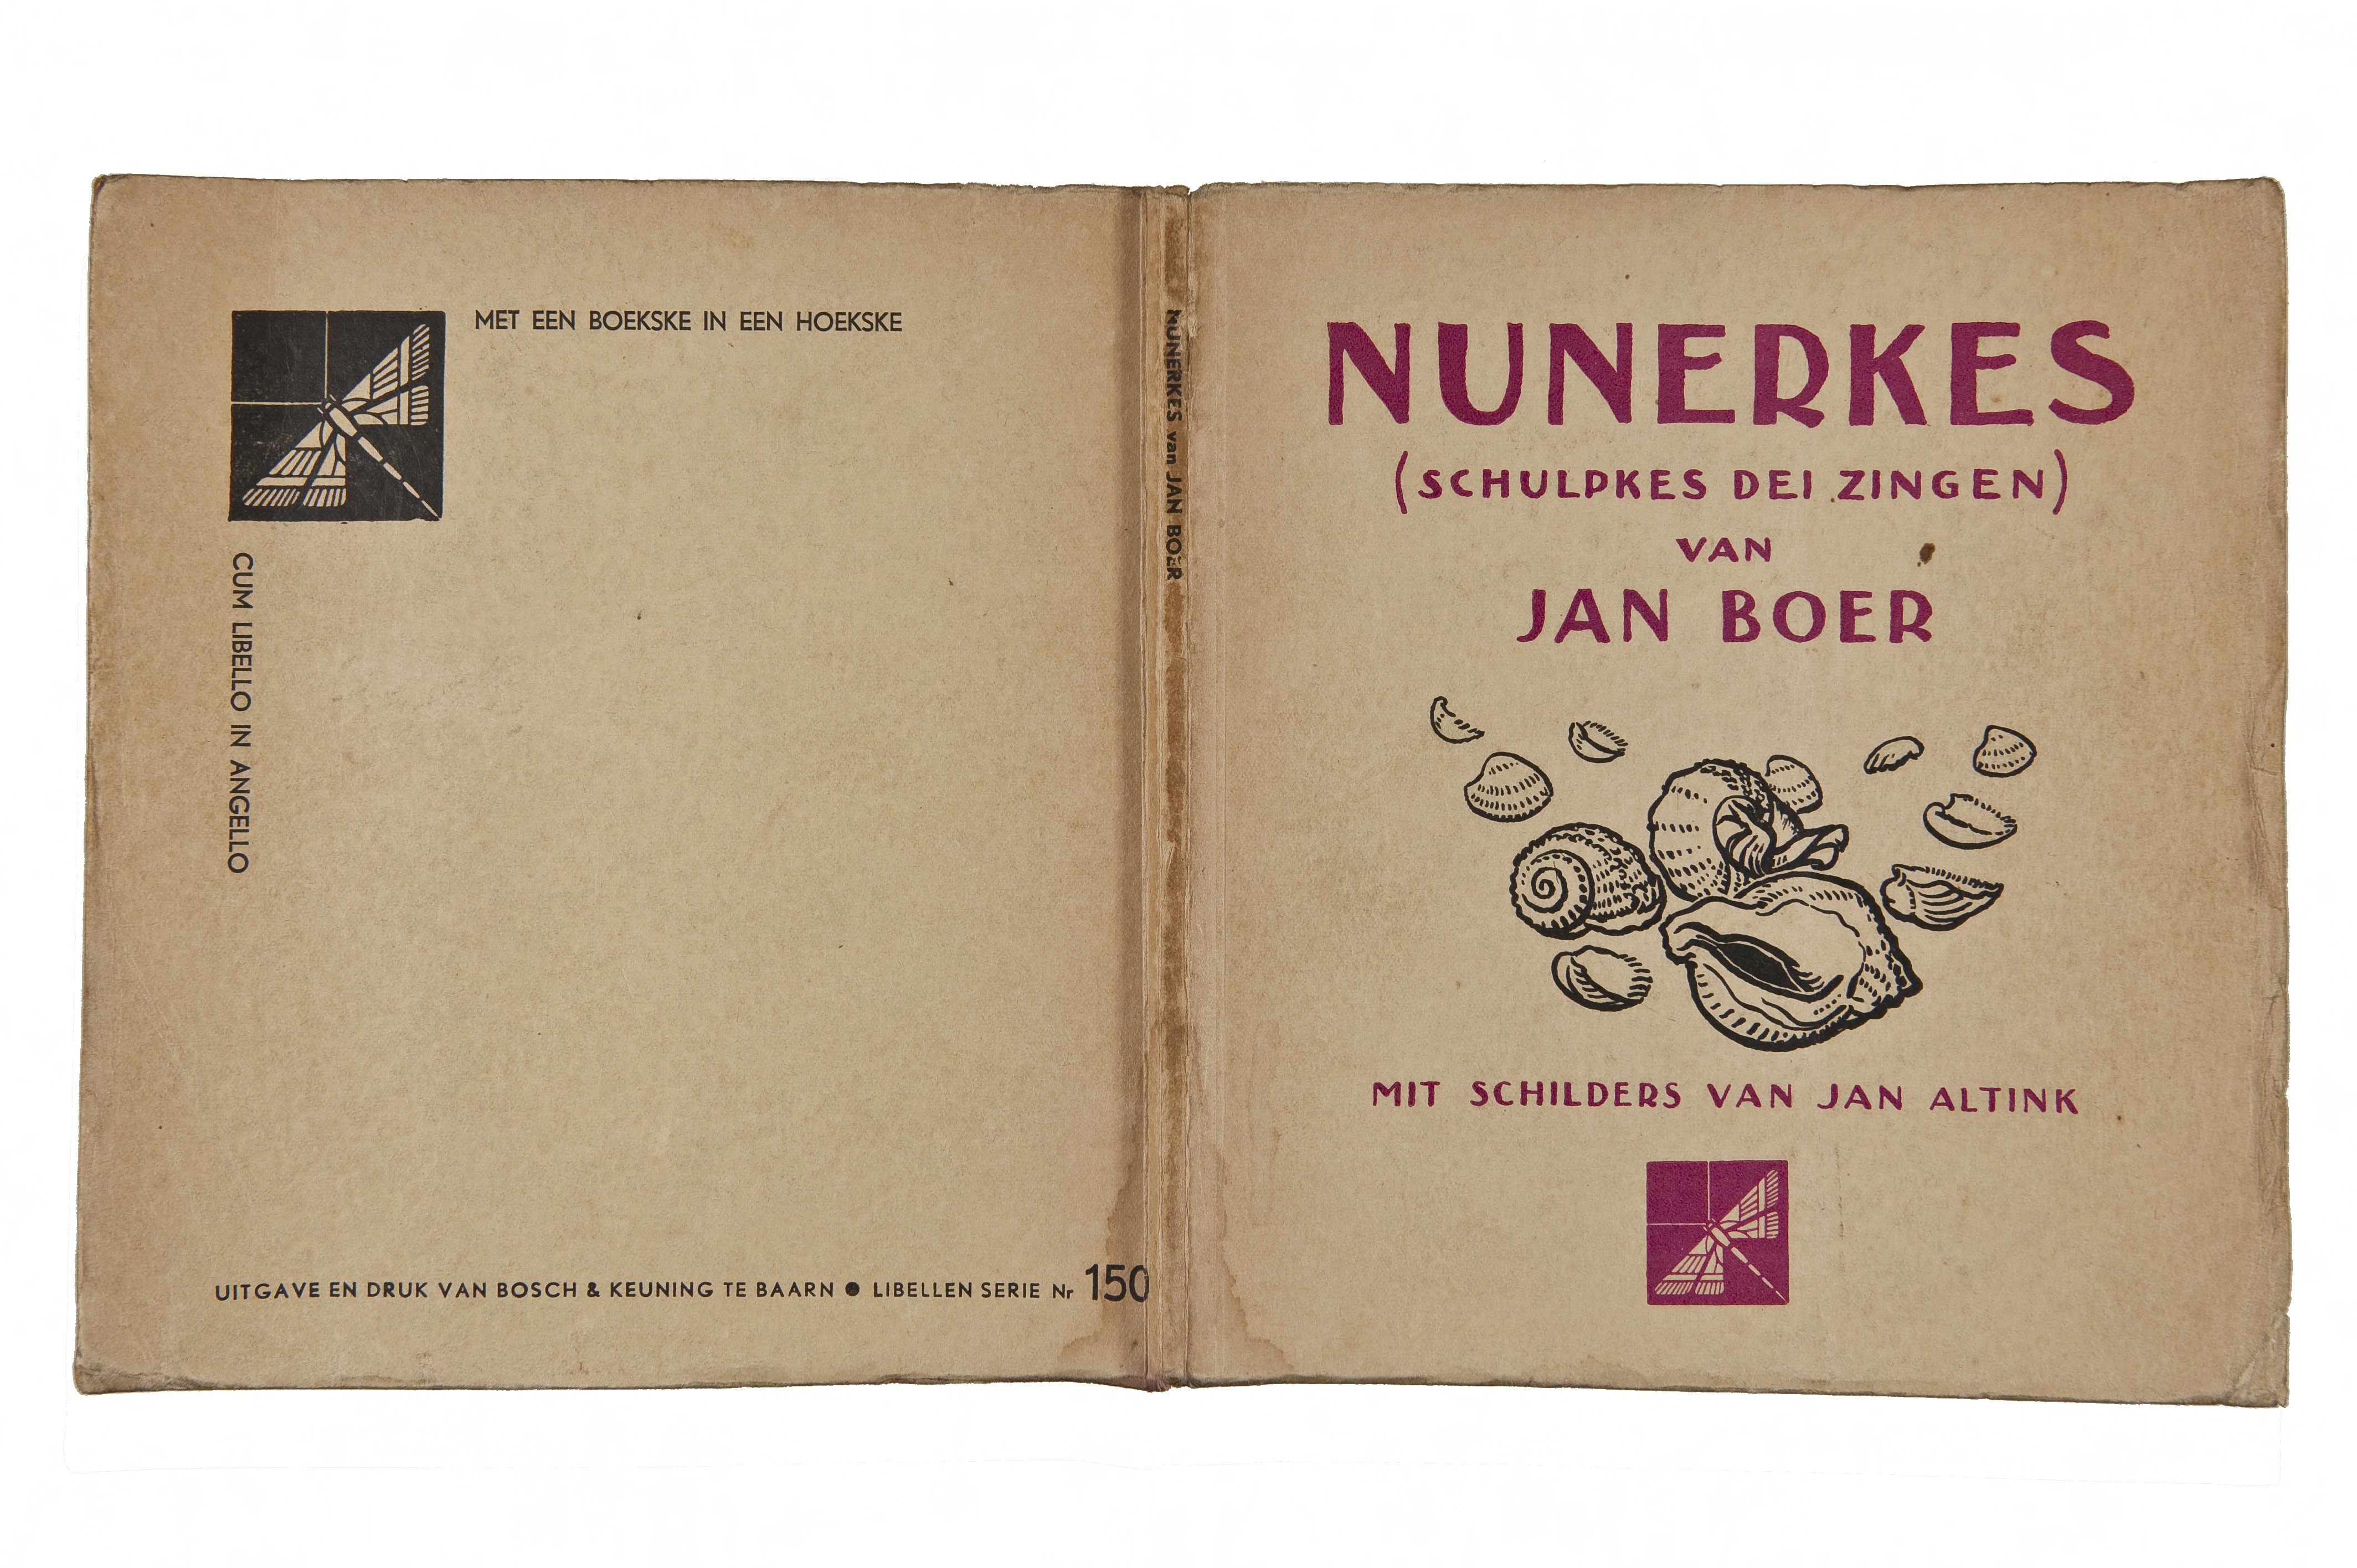 Nunerkes, Bosch & Keuning, 1935